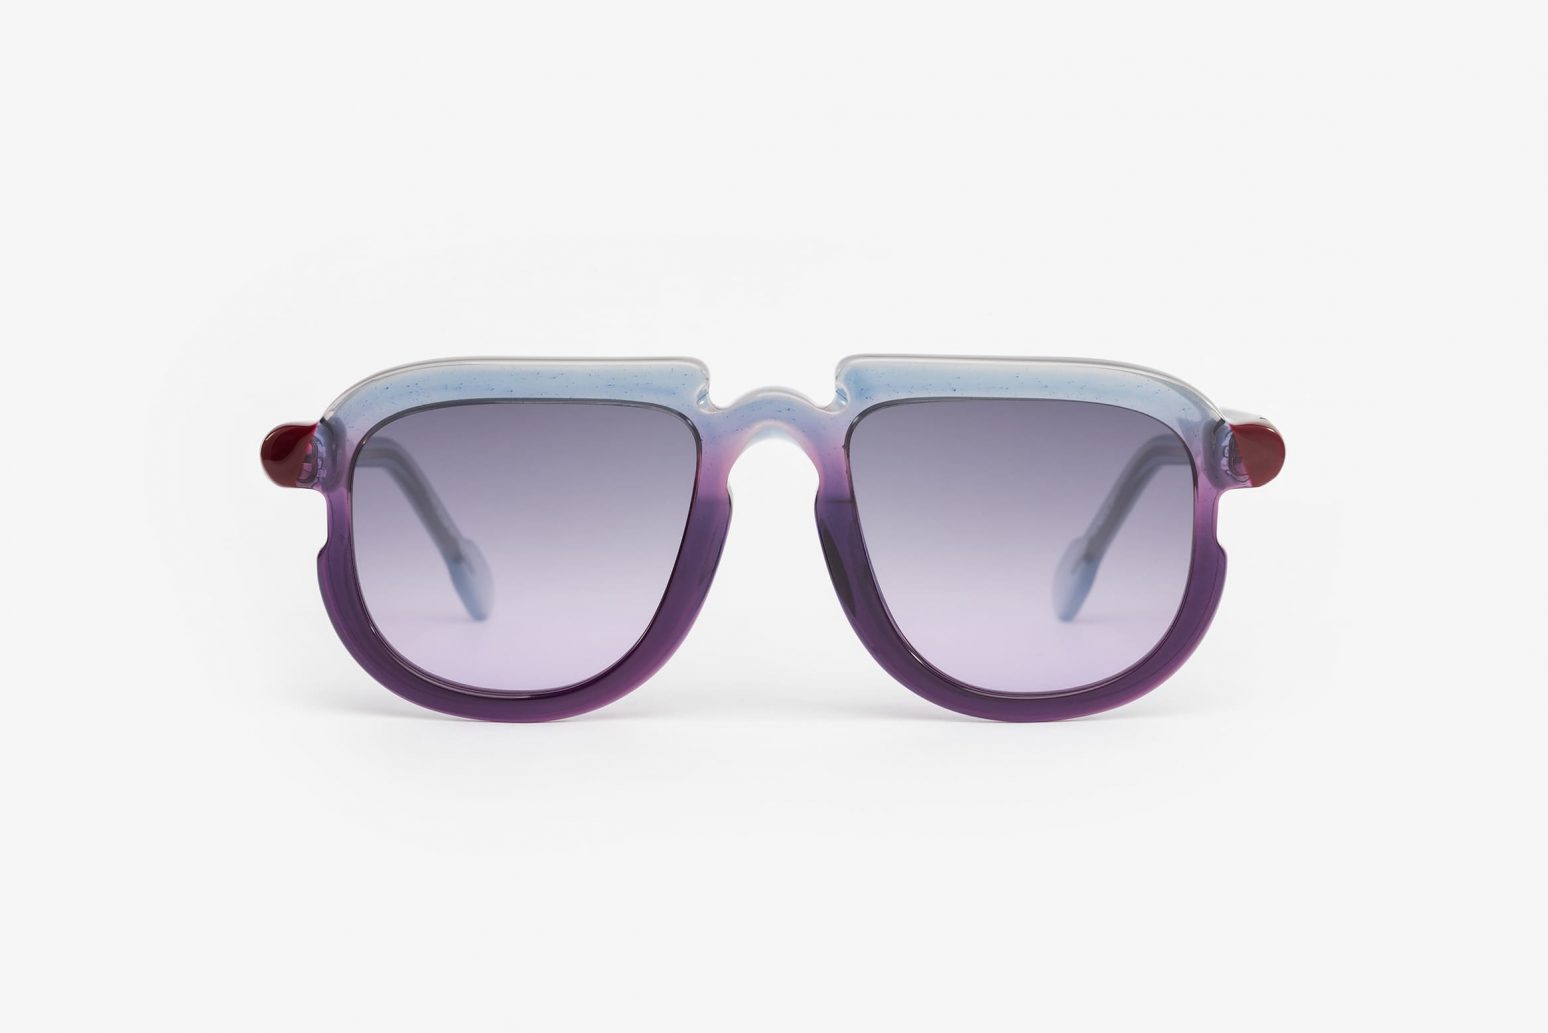 Sunglasses Eliasson Portrait Eyewear - Optica Gran Vía Barcelona